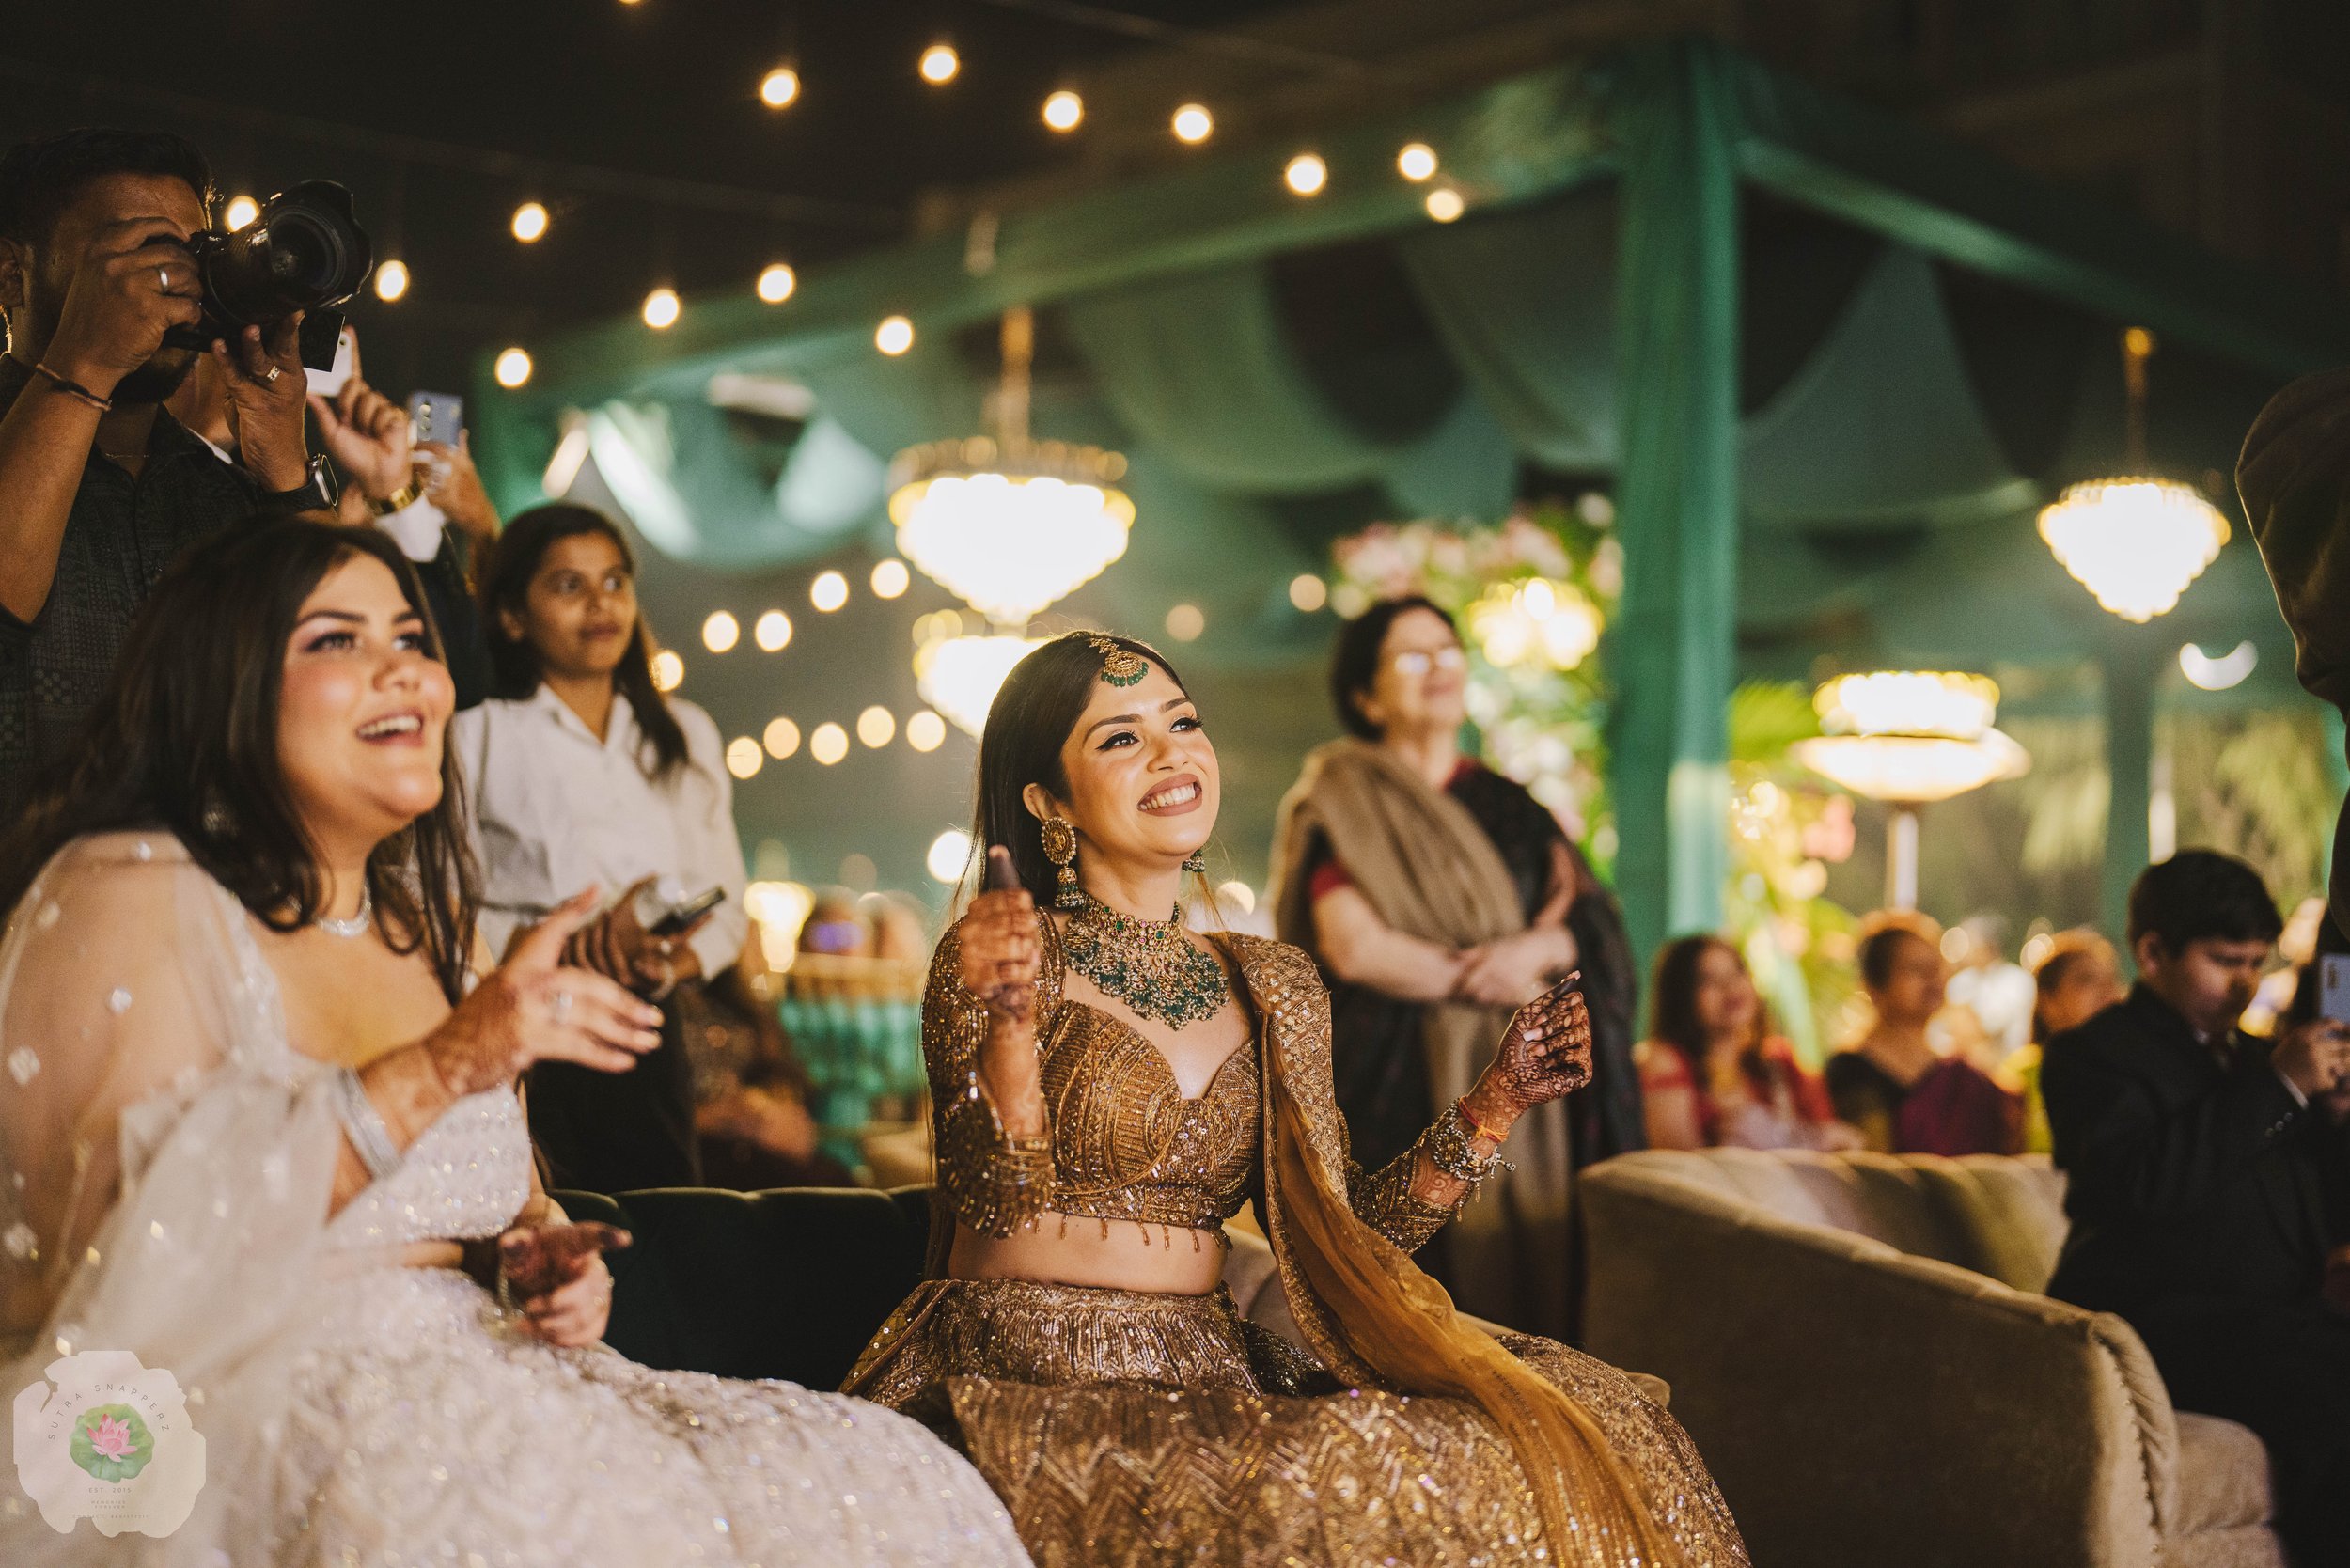 ransform Your Wedding Day into a Visual Masterpiece like Anant Ambani's Wedding